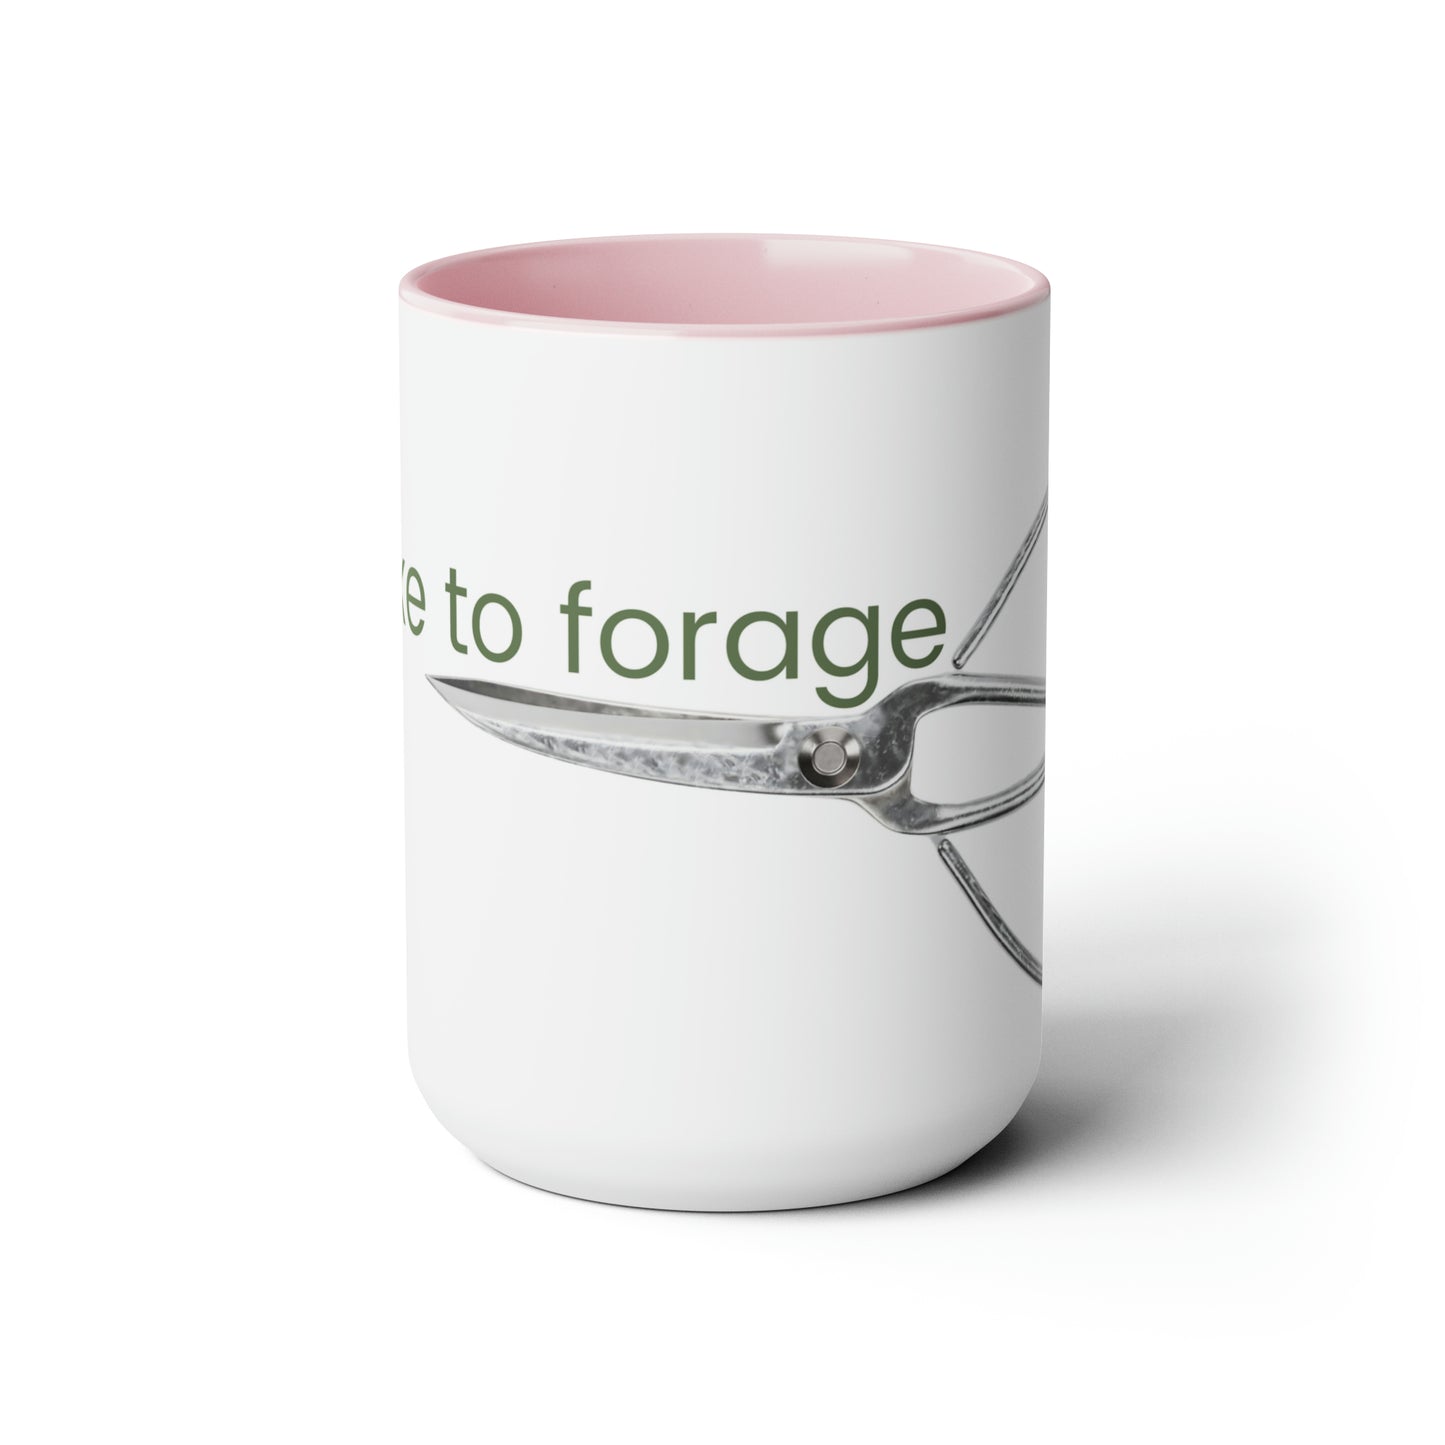 i break to forage - 15oz graphic mug